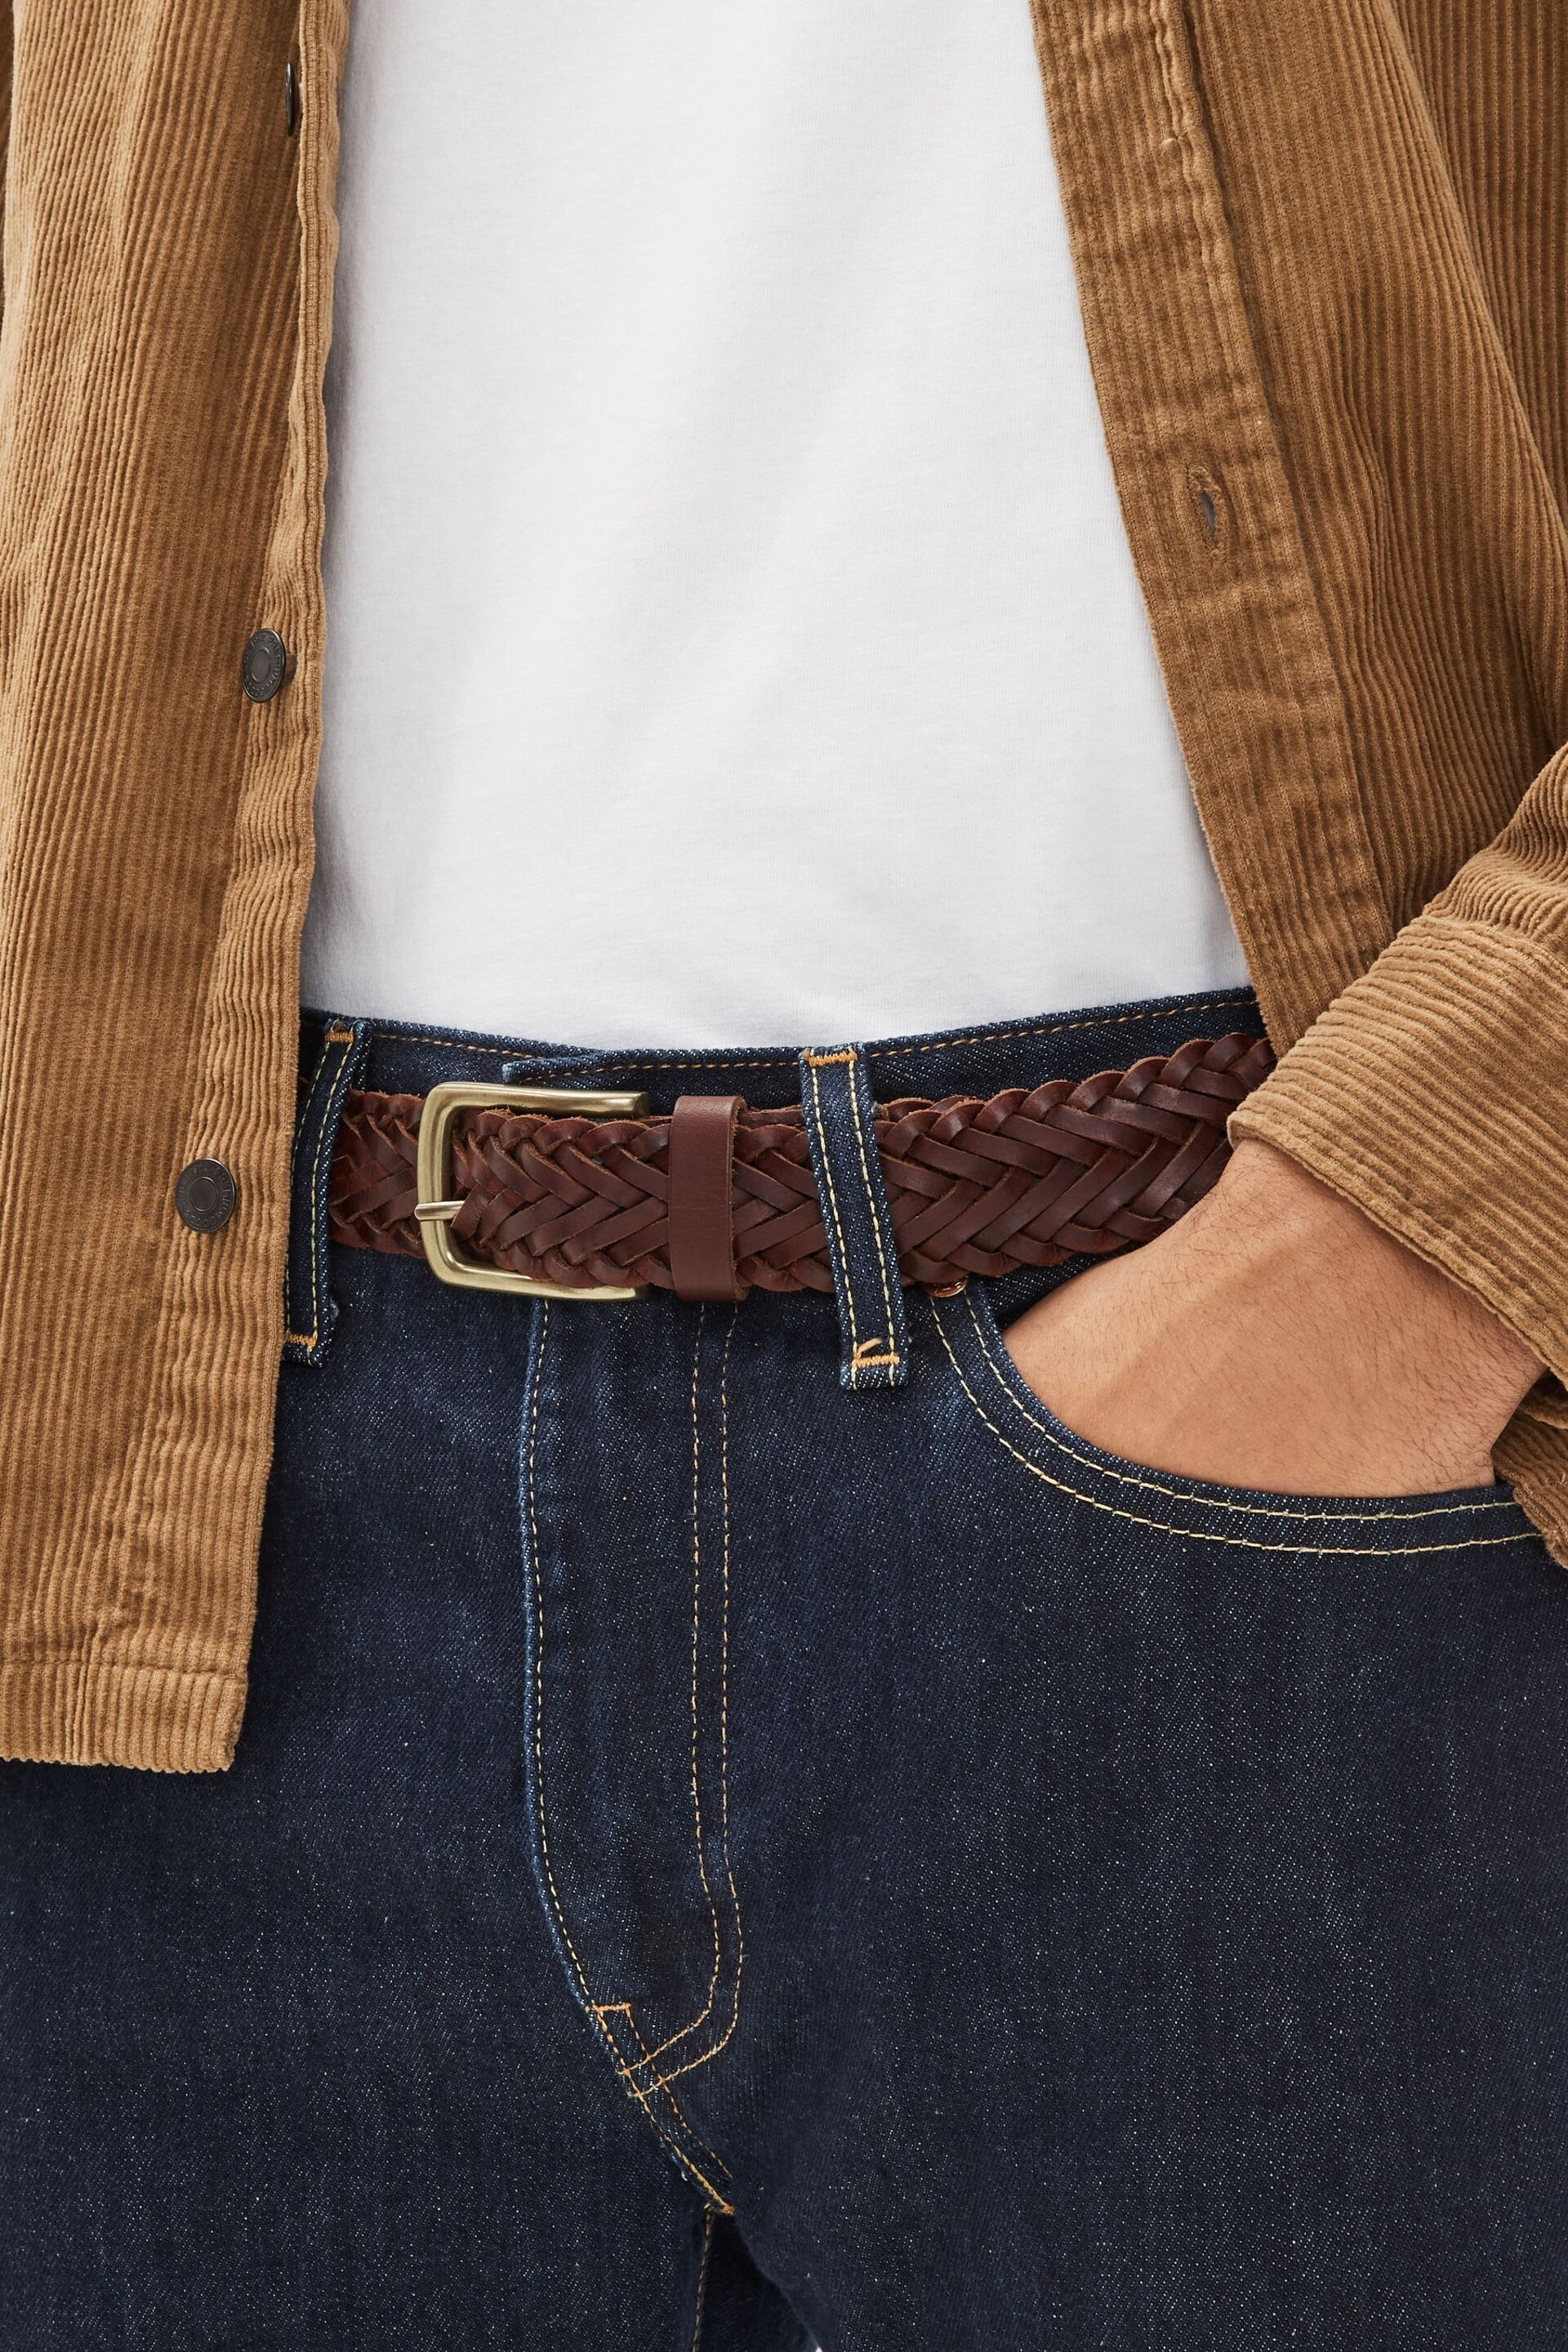 Dark Brown Weave Leather Belt - Image 2 of 4